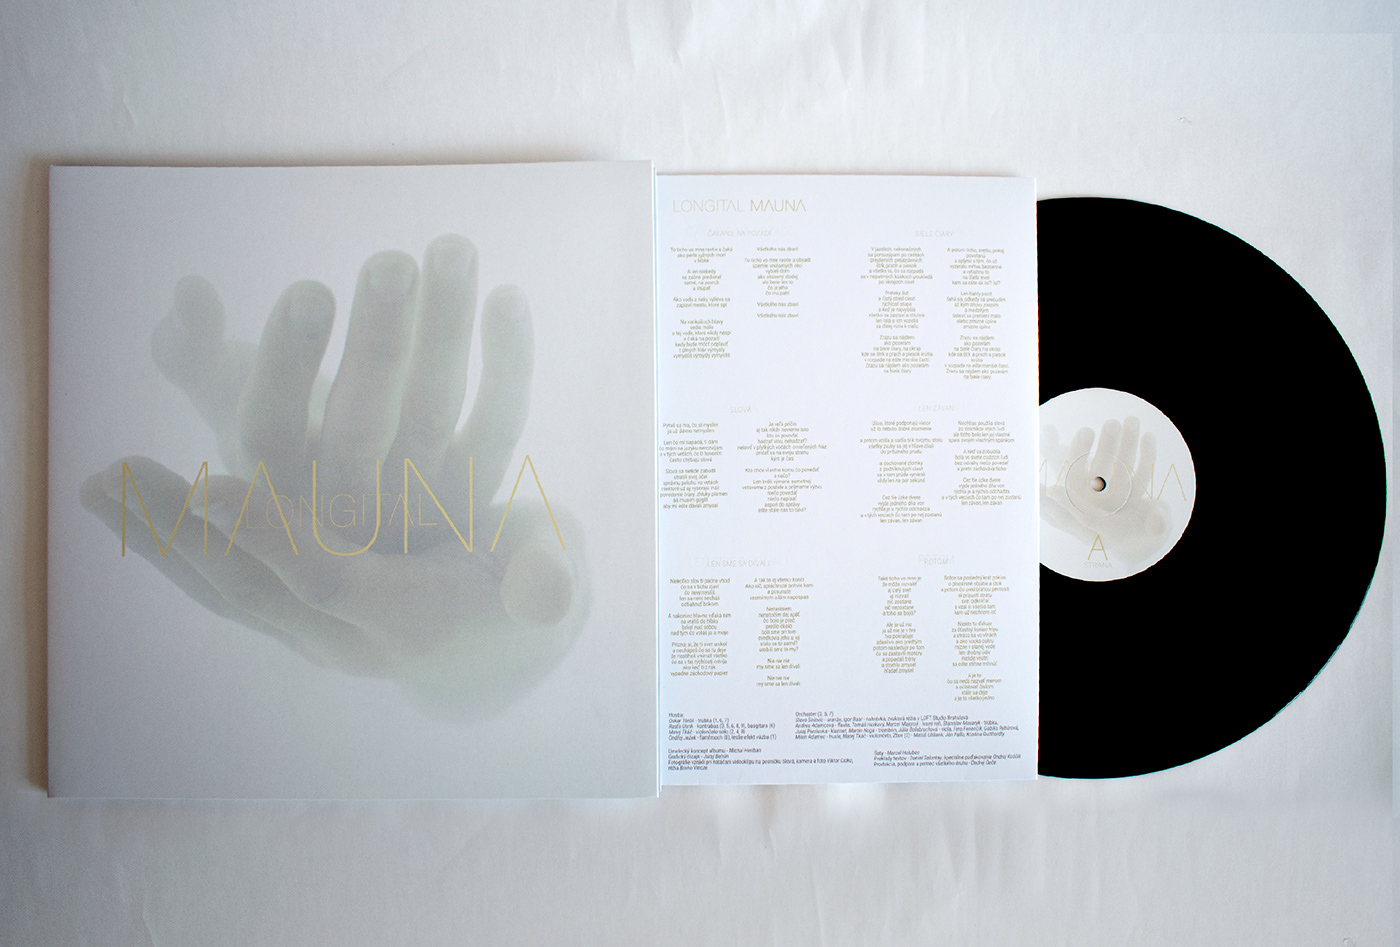 LP longital mauna slovakia cd cover design cover humenne hands